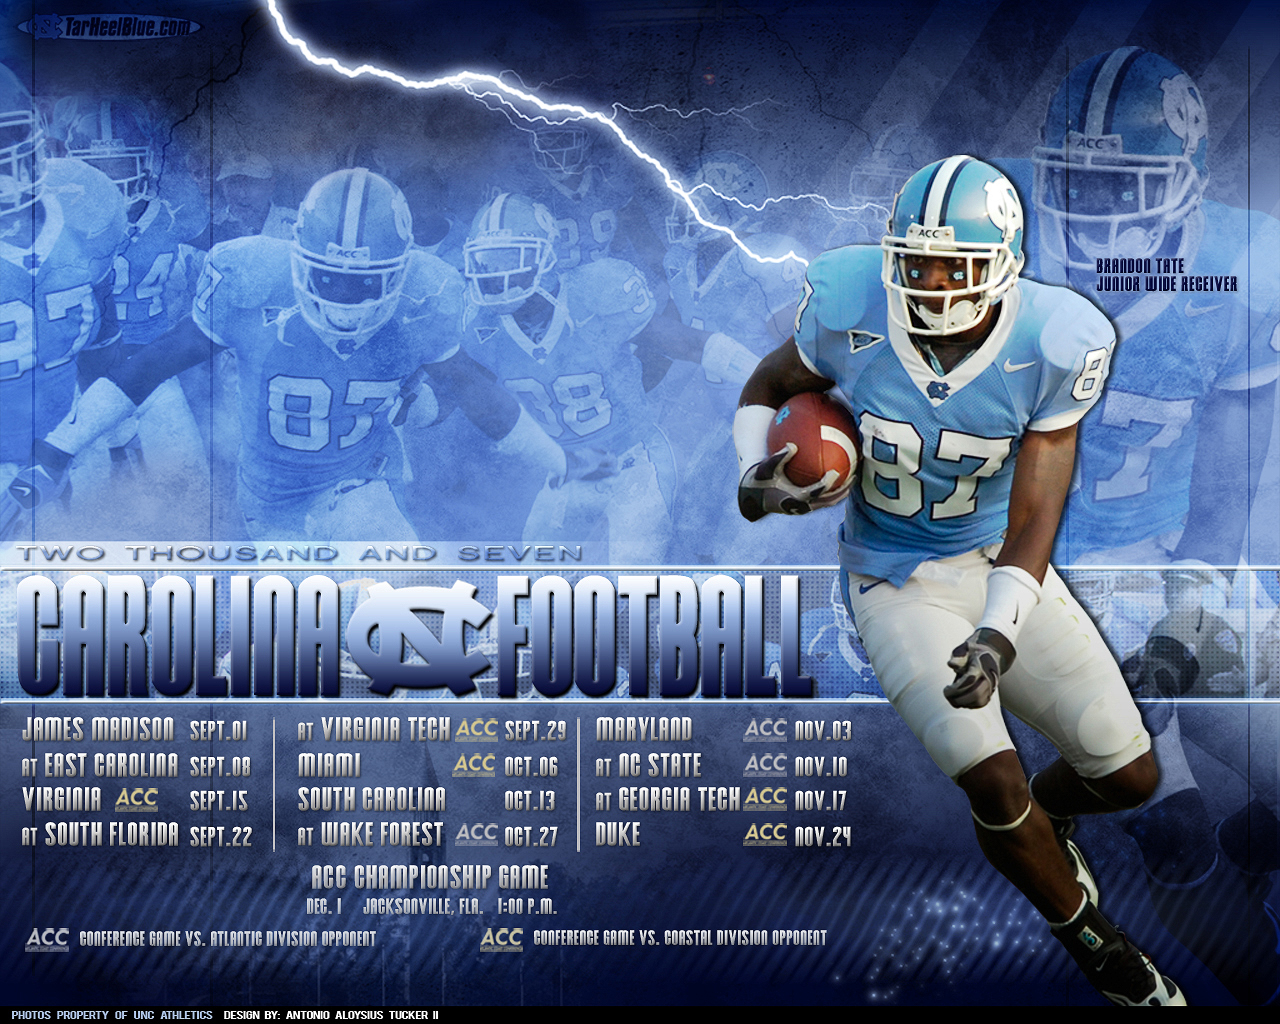 North Carolina TarHeel Football 2008 schedule wallpaper desktop background.